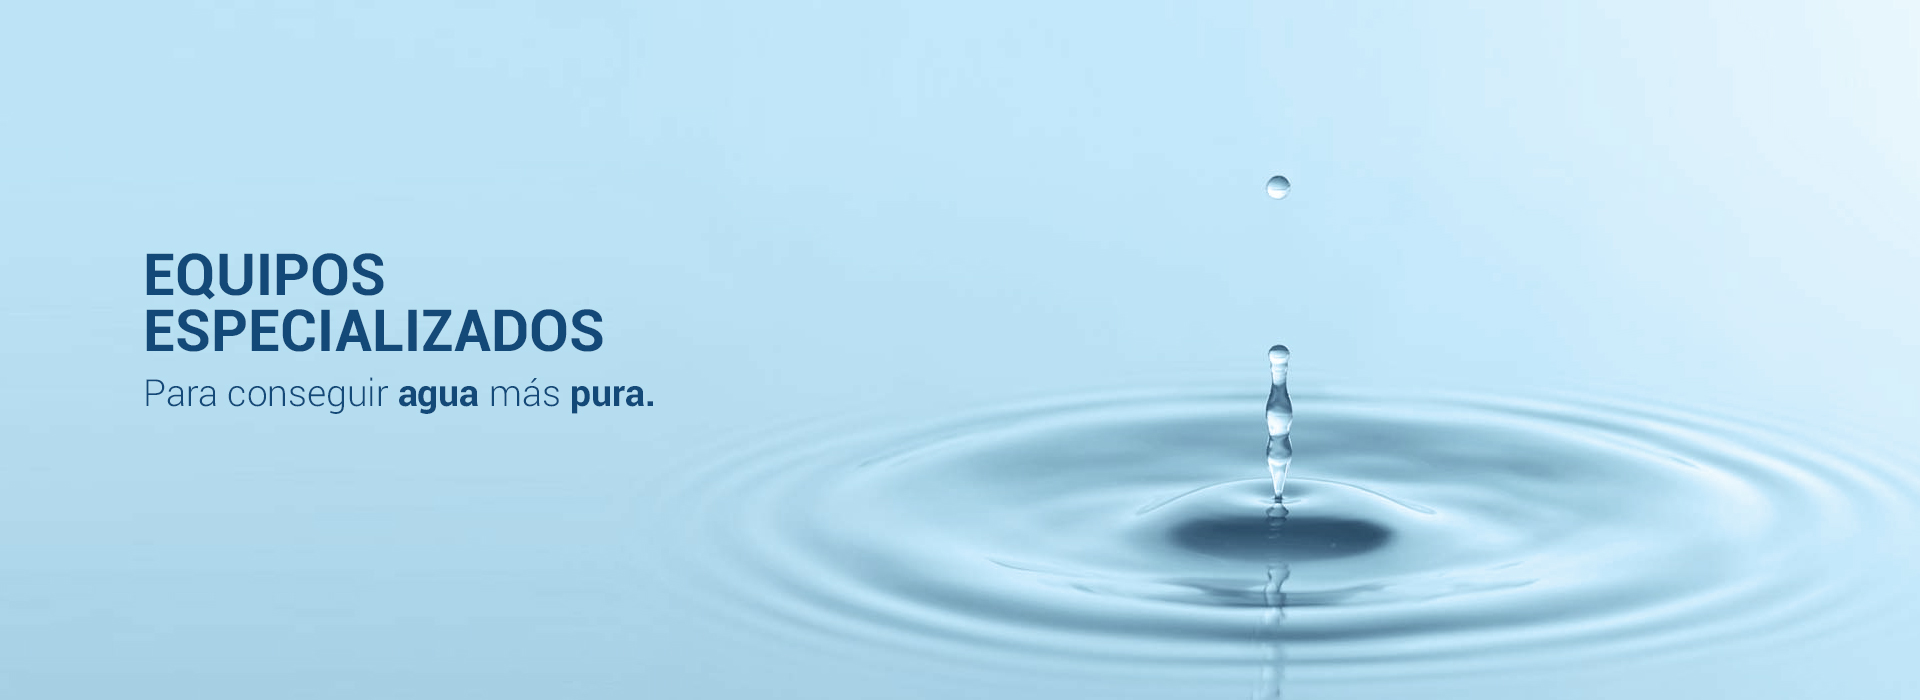 fuentes de agua para empresas